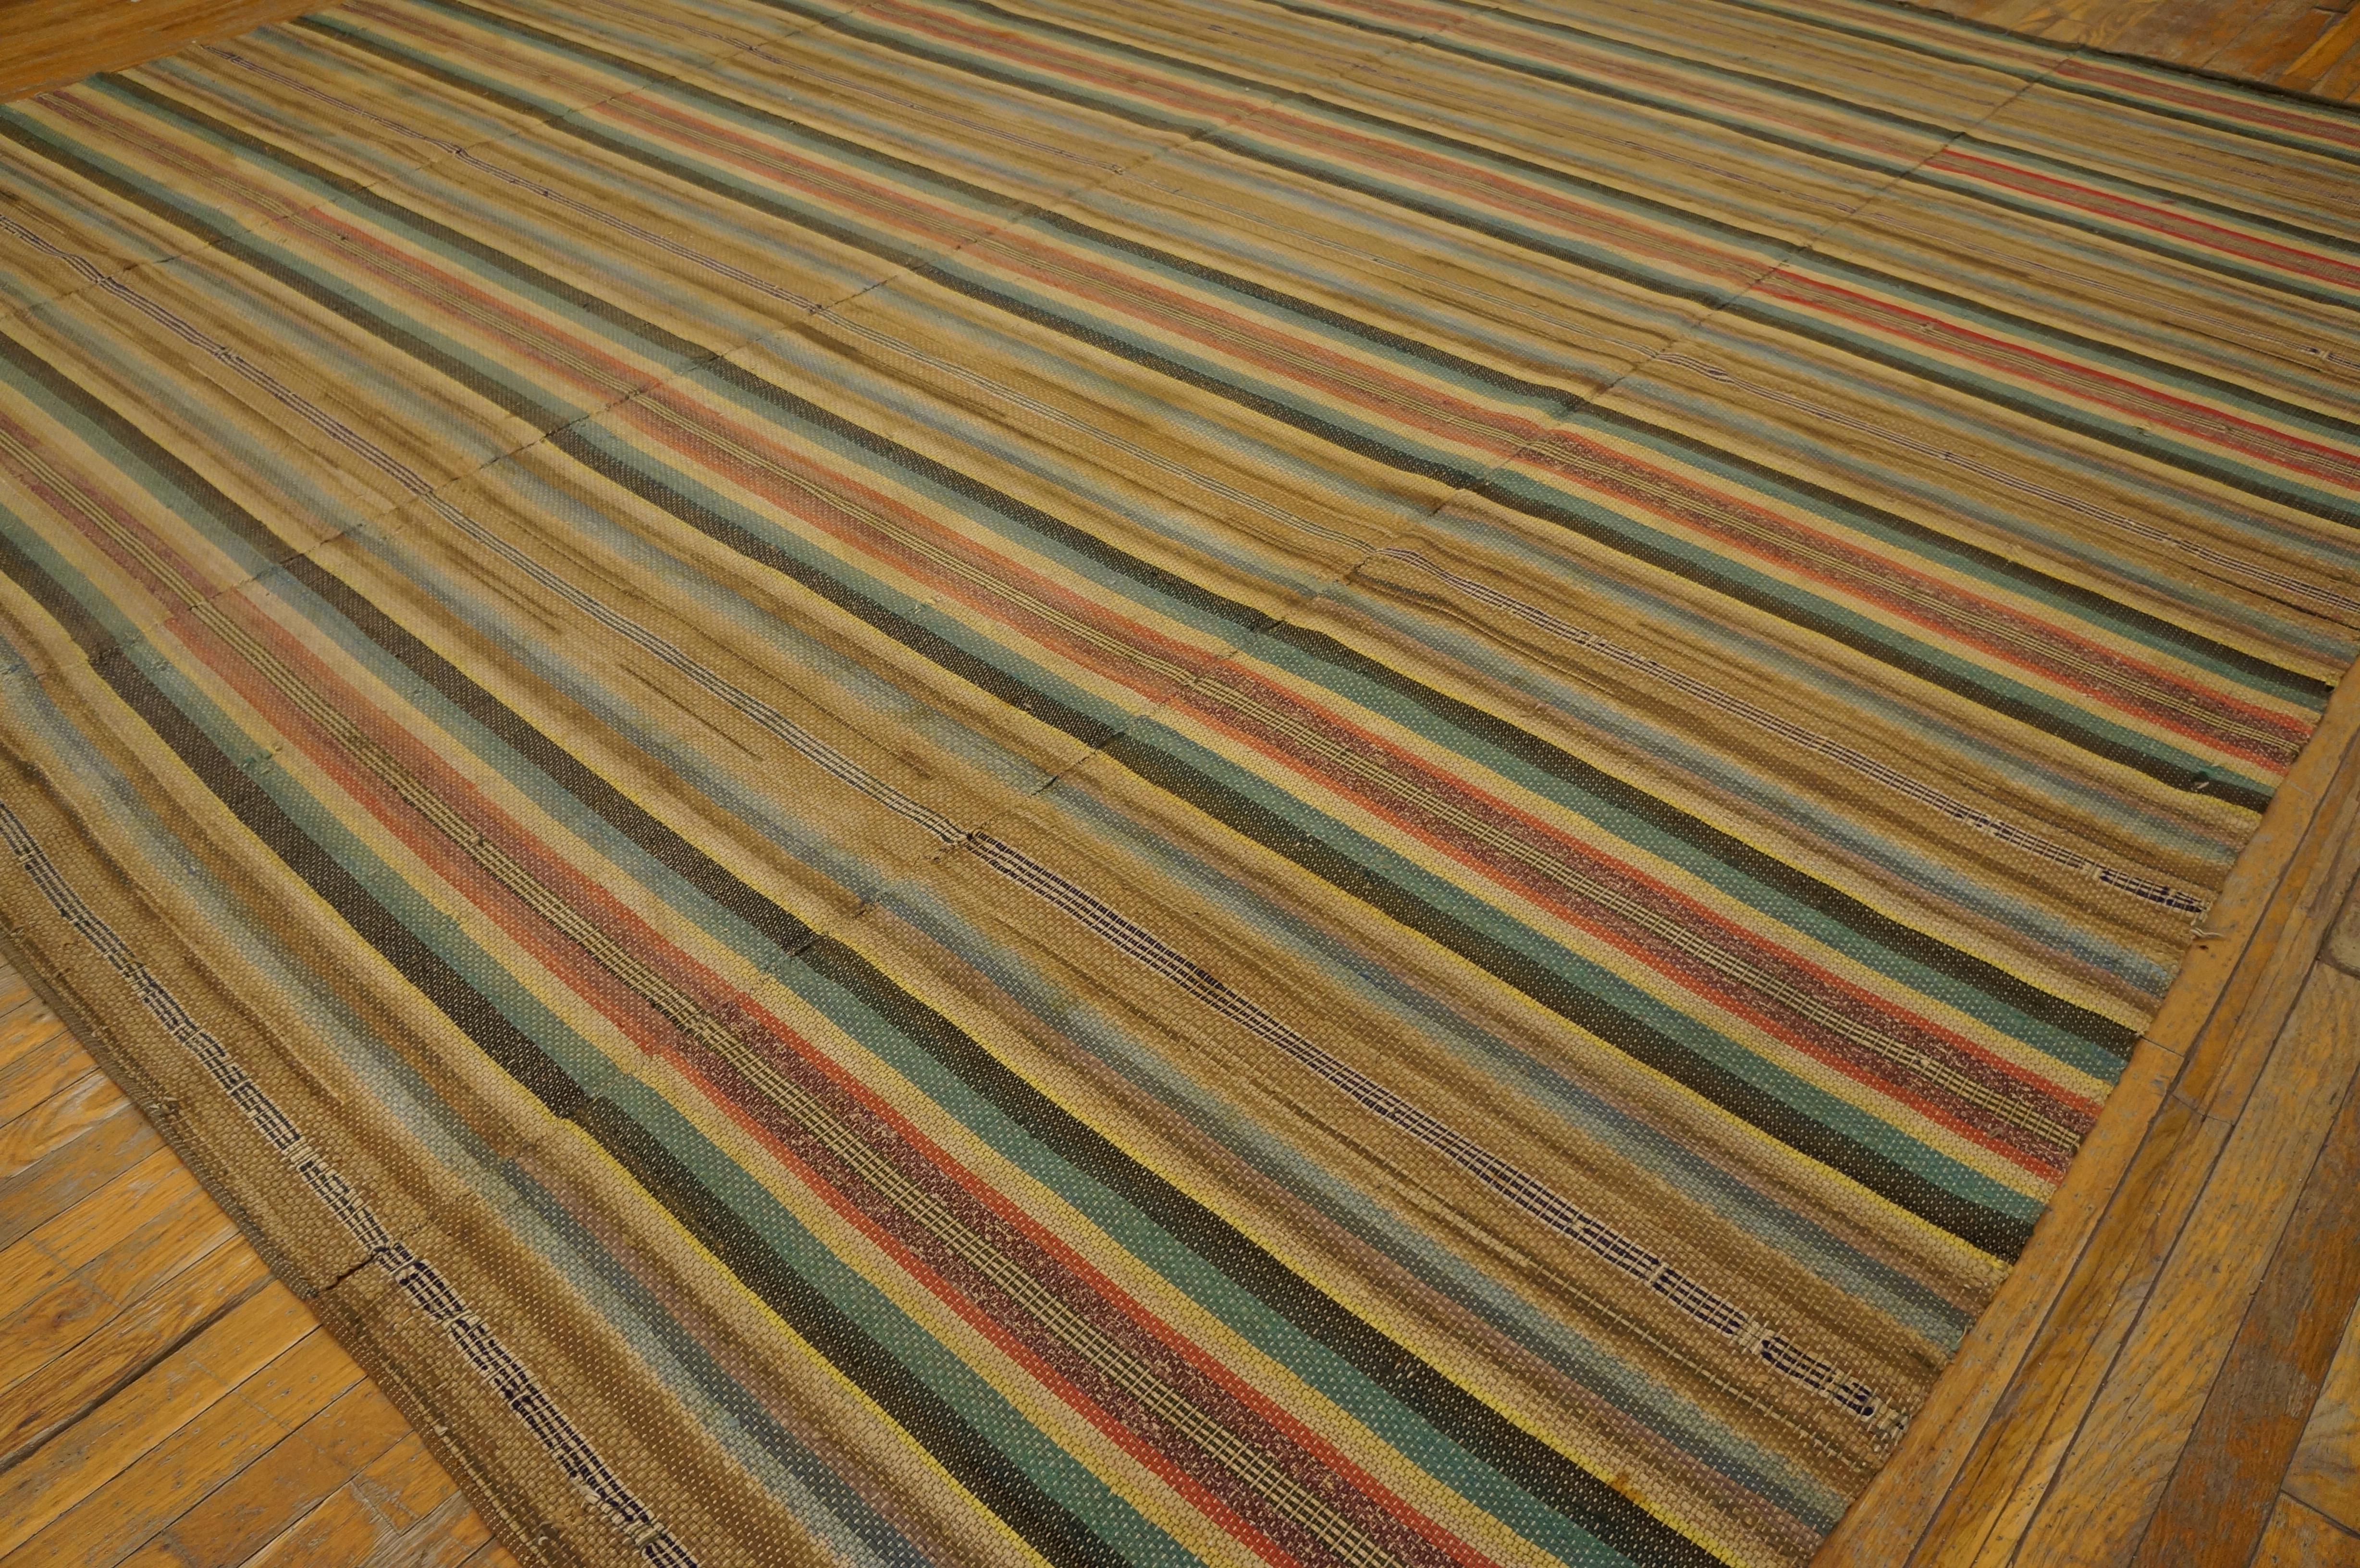 Antique American Rag rug, size: 11'0